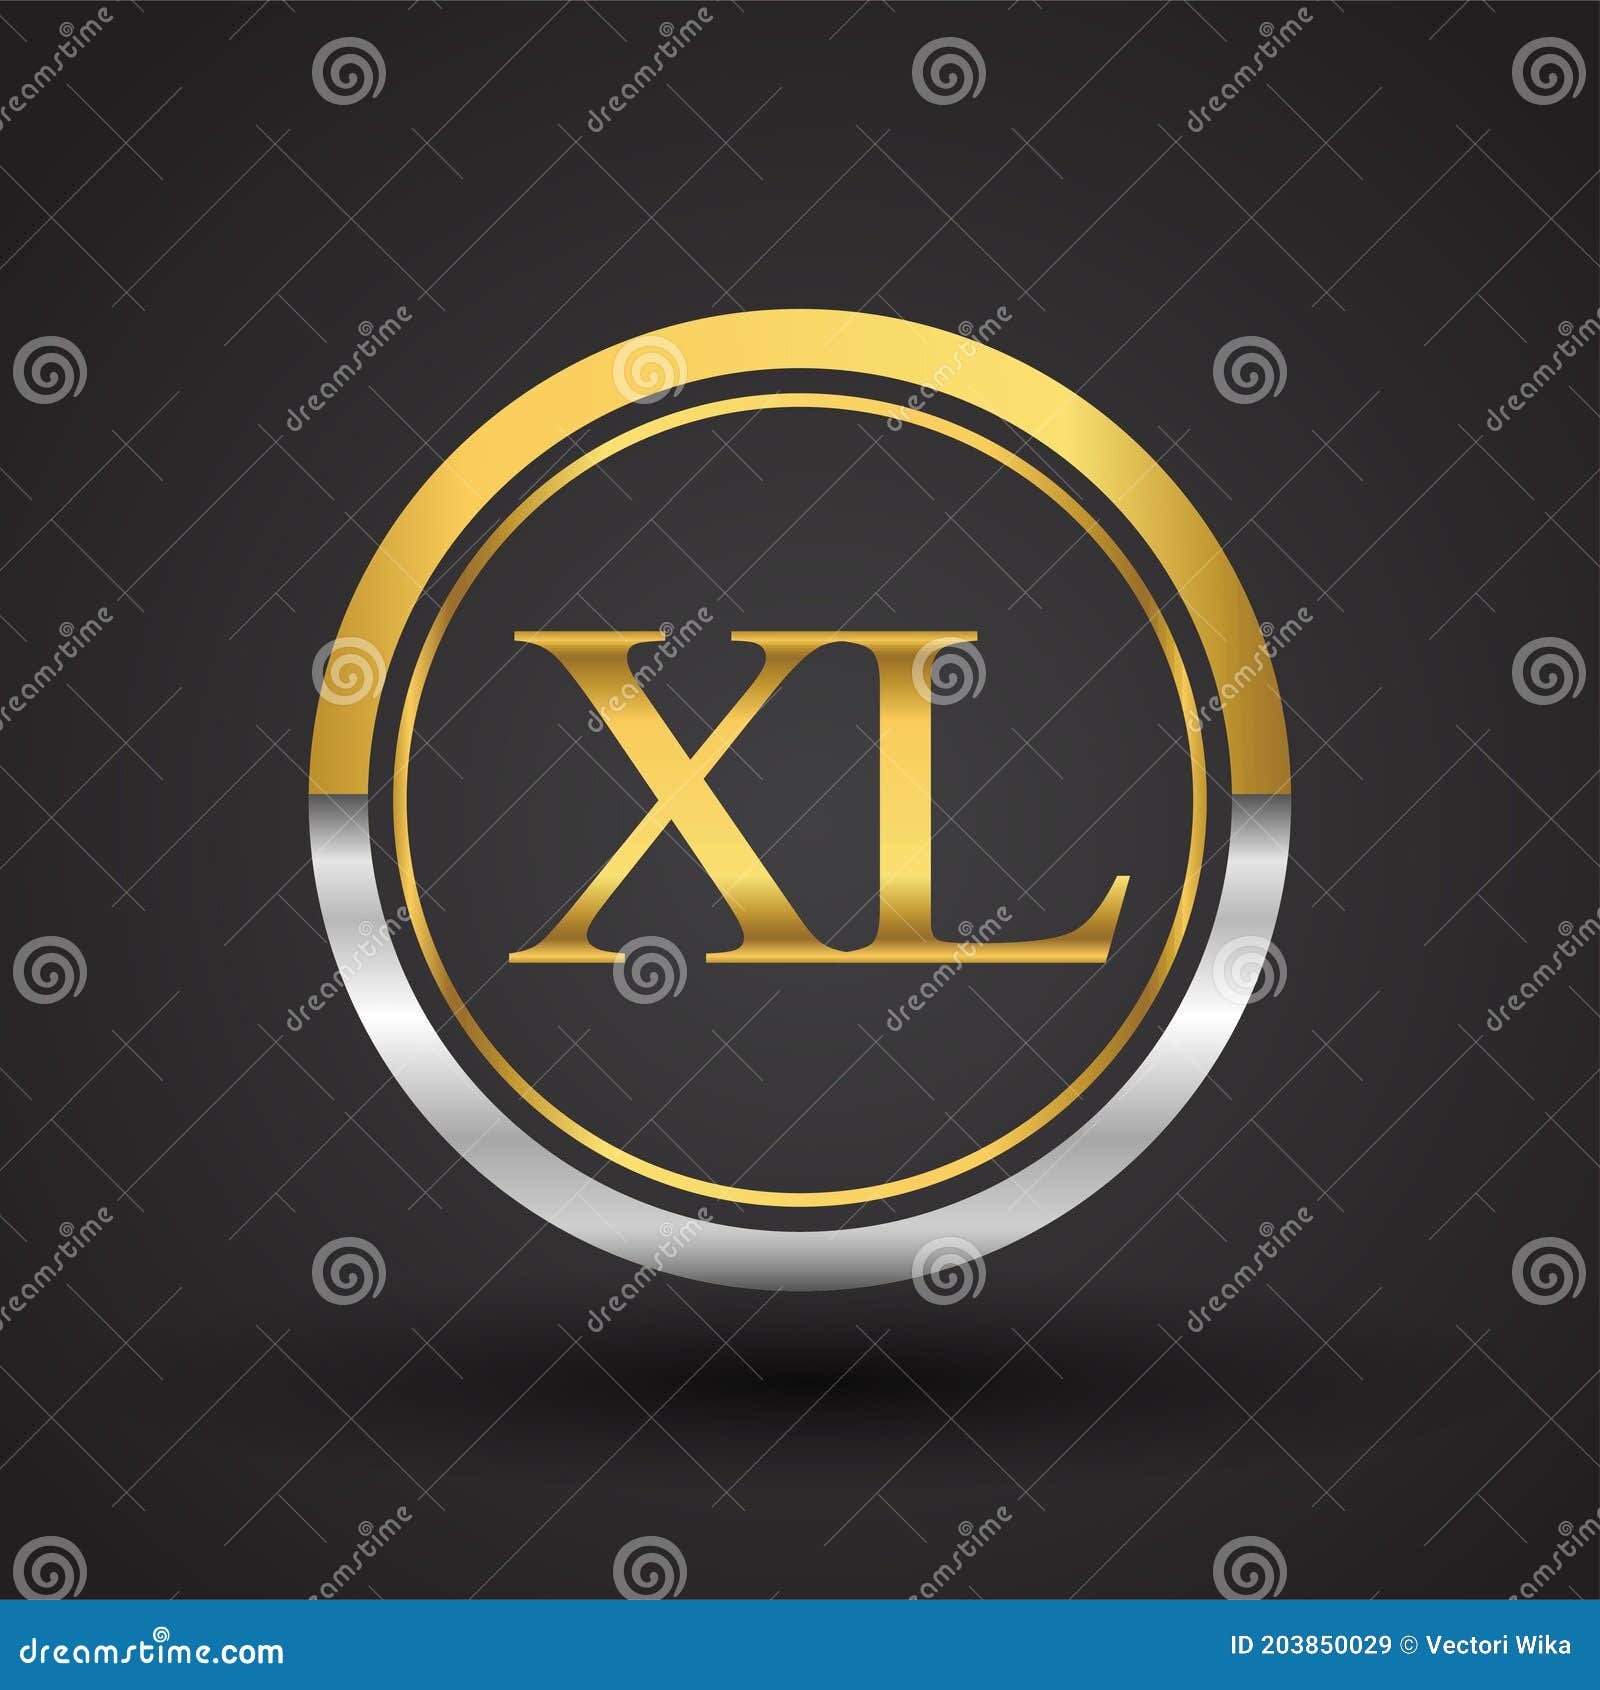 XL  Identity Designed